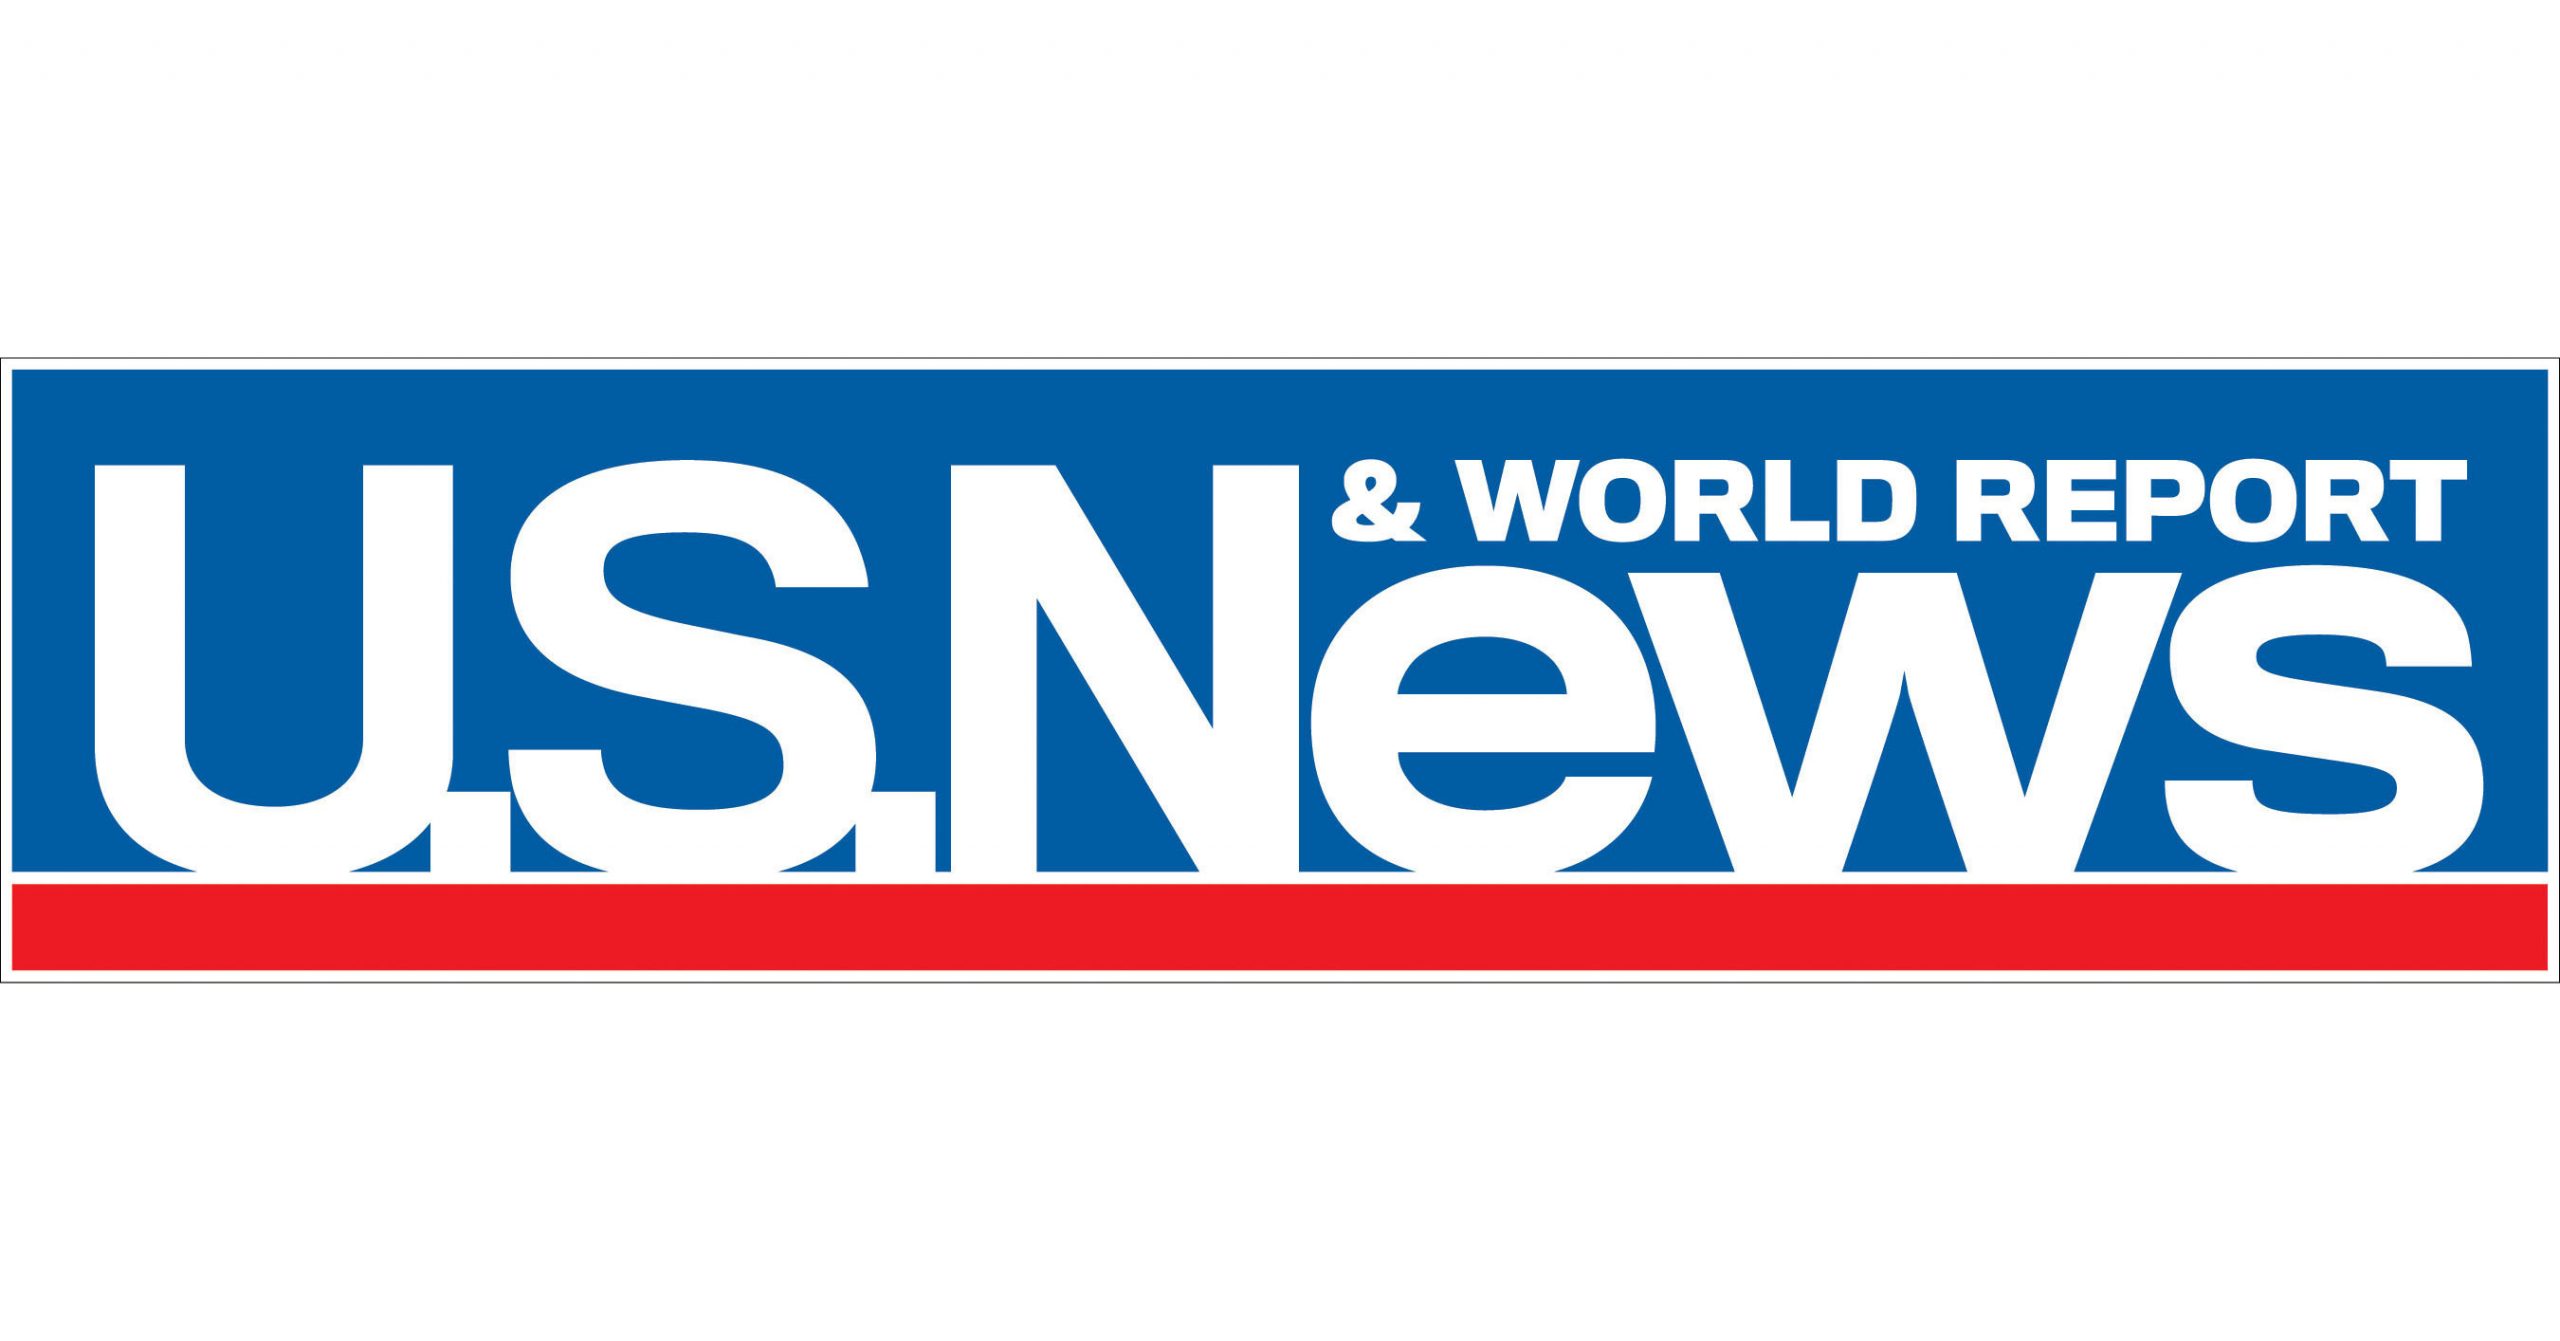 U.S. News & world report logo.